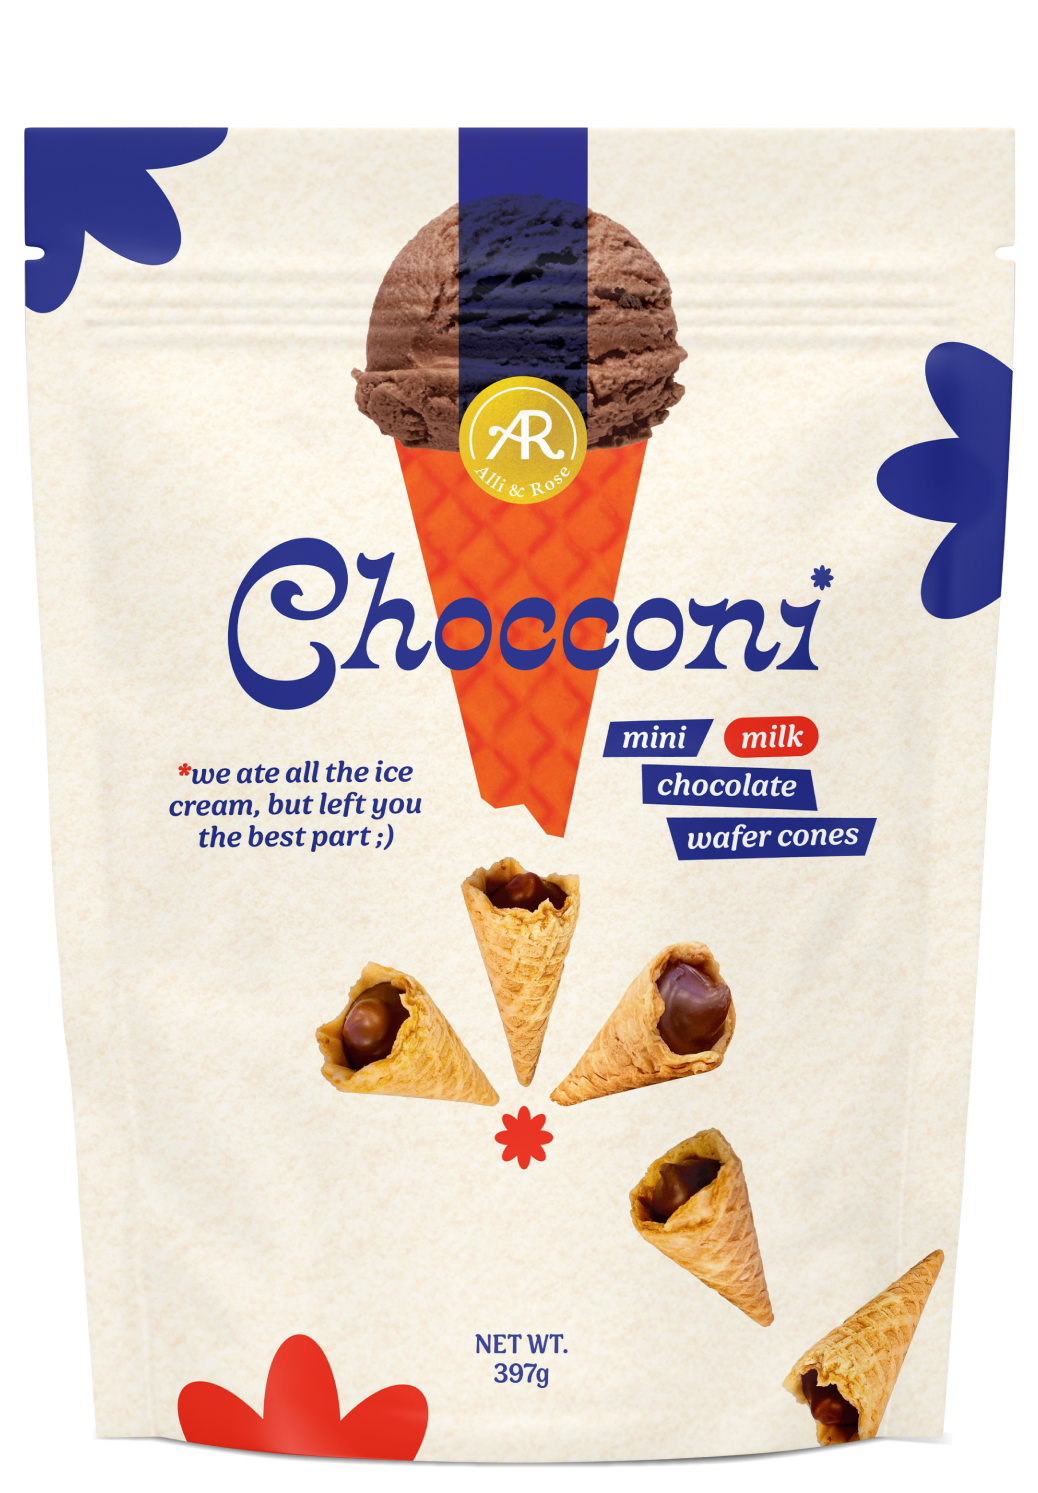 Chocconi Mini Milk Chocolate Wafer Cones